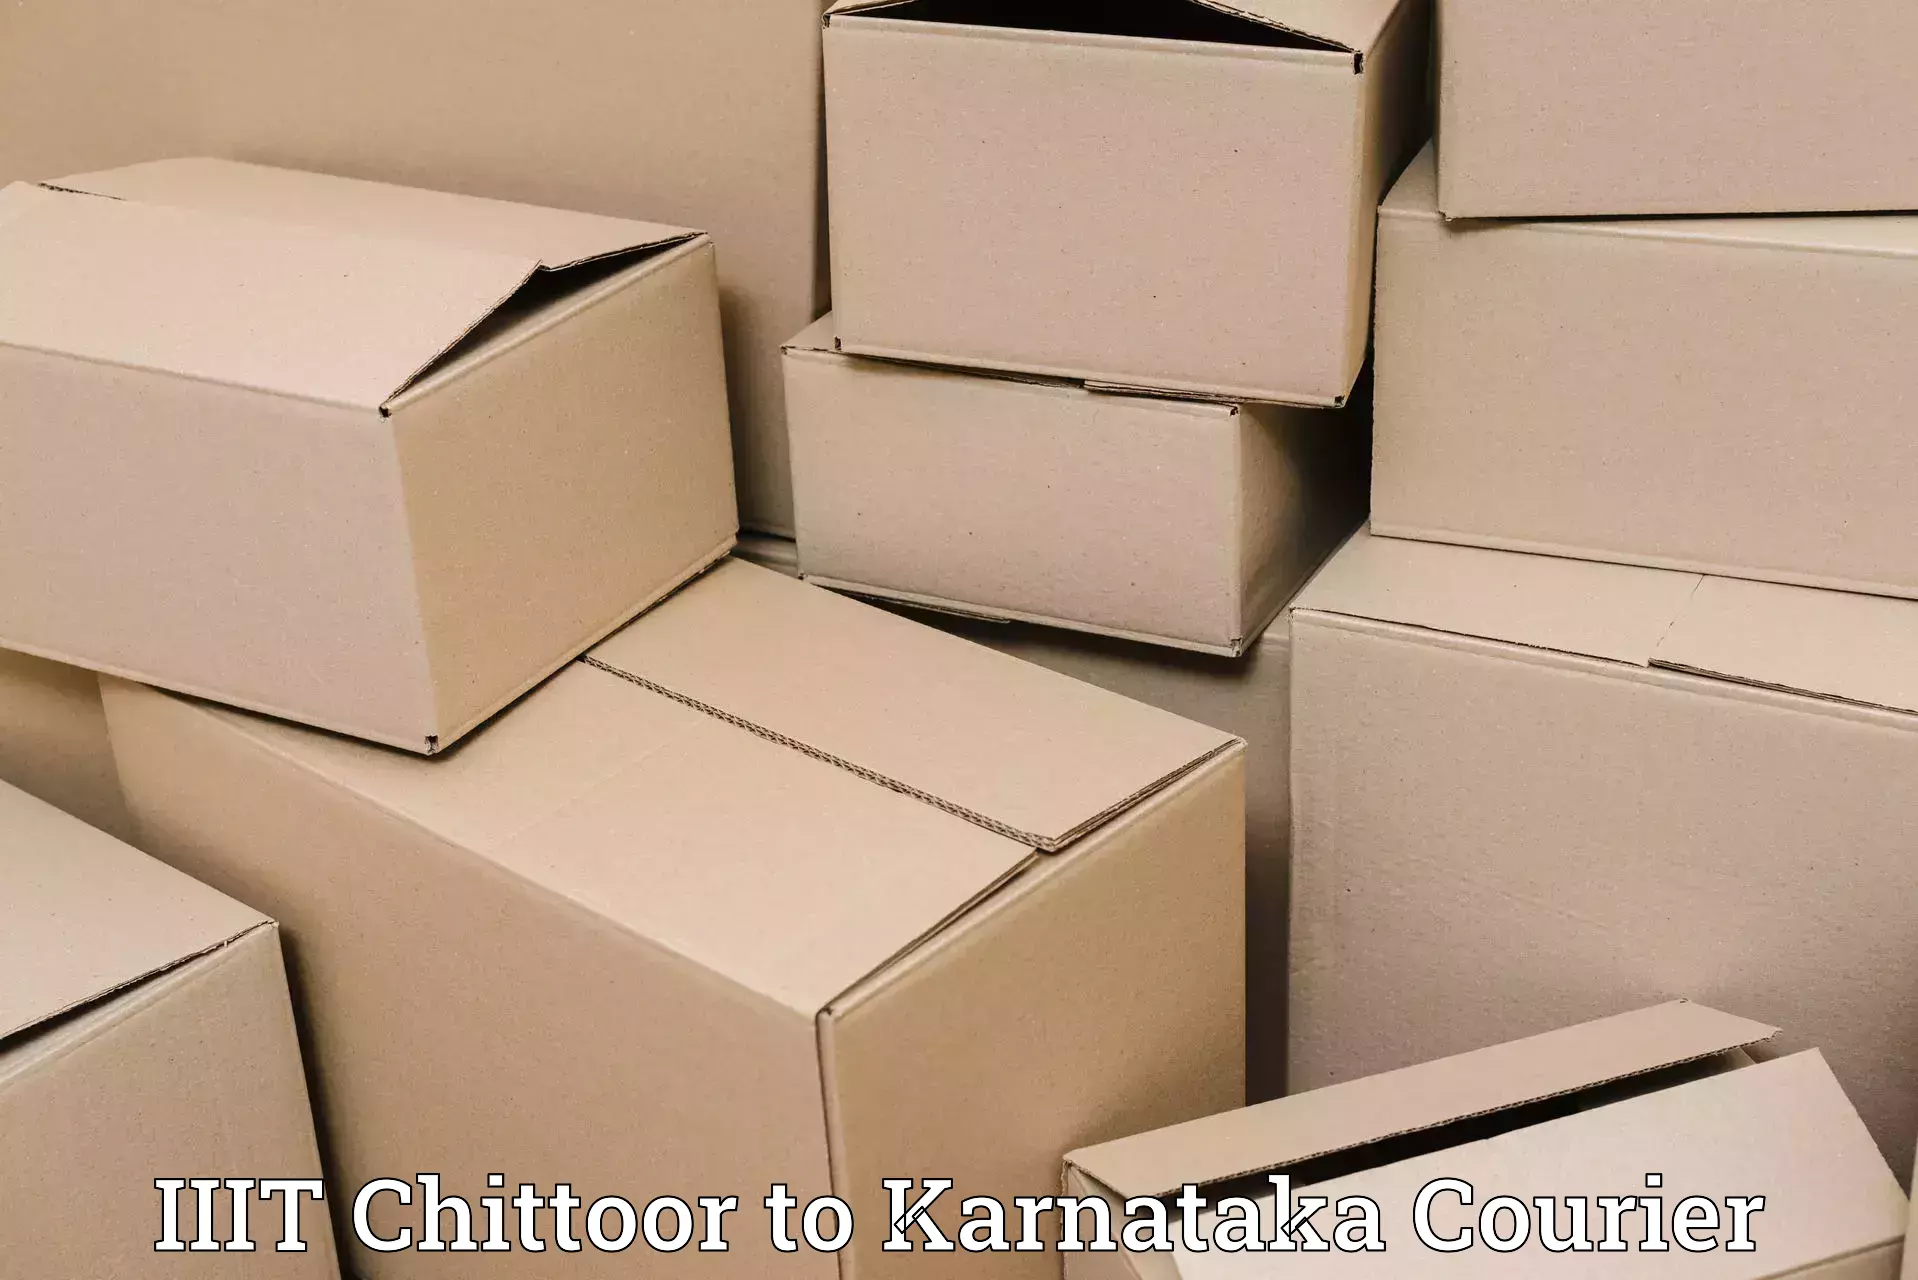 Integrated shipping systems IIIT Chittoor to Karnataka